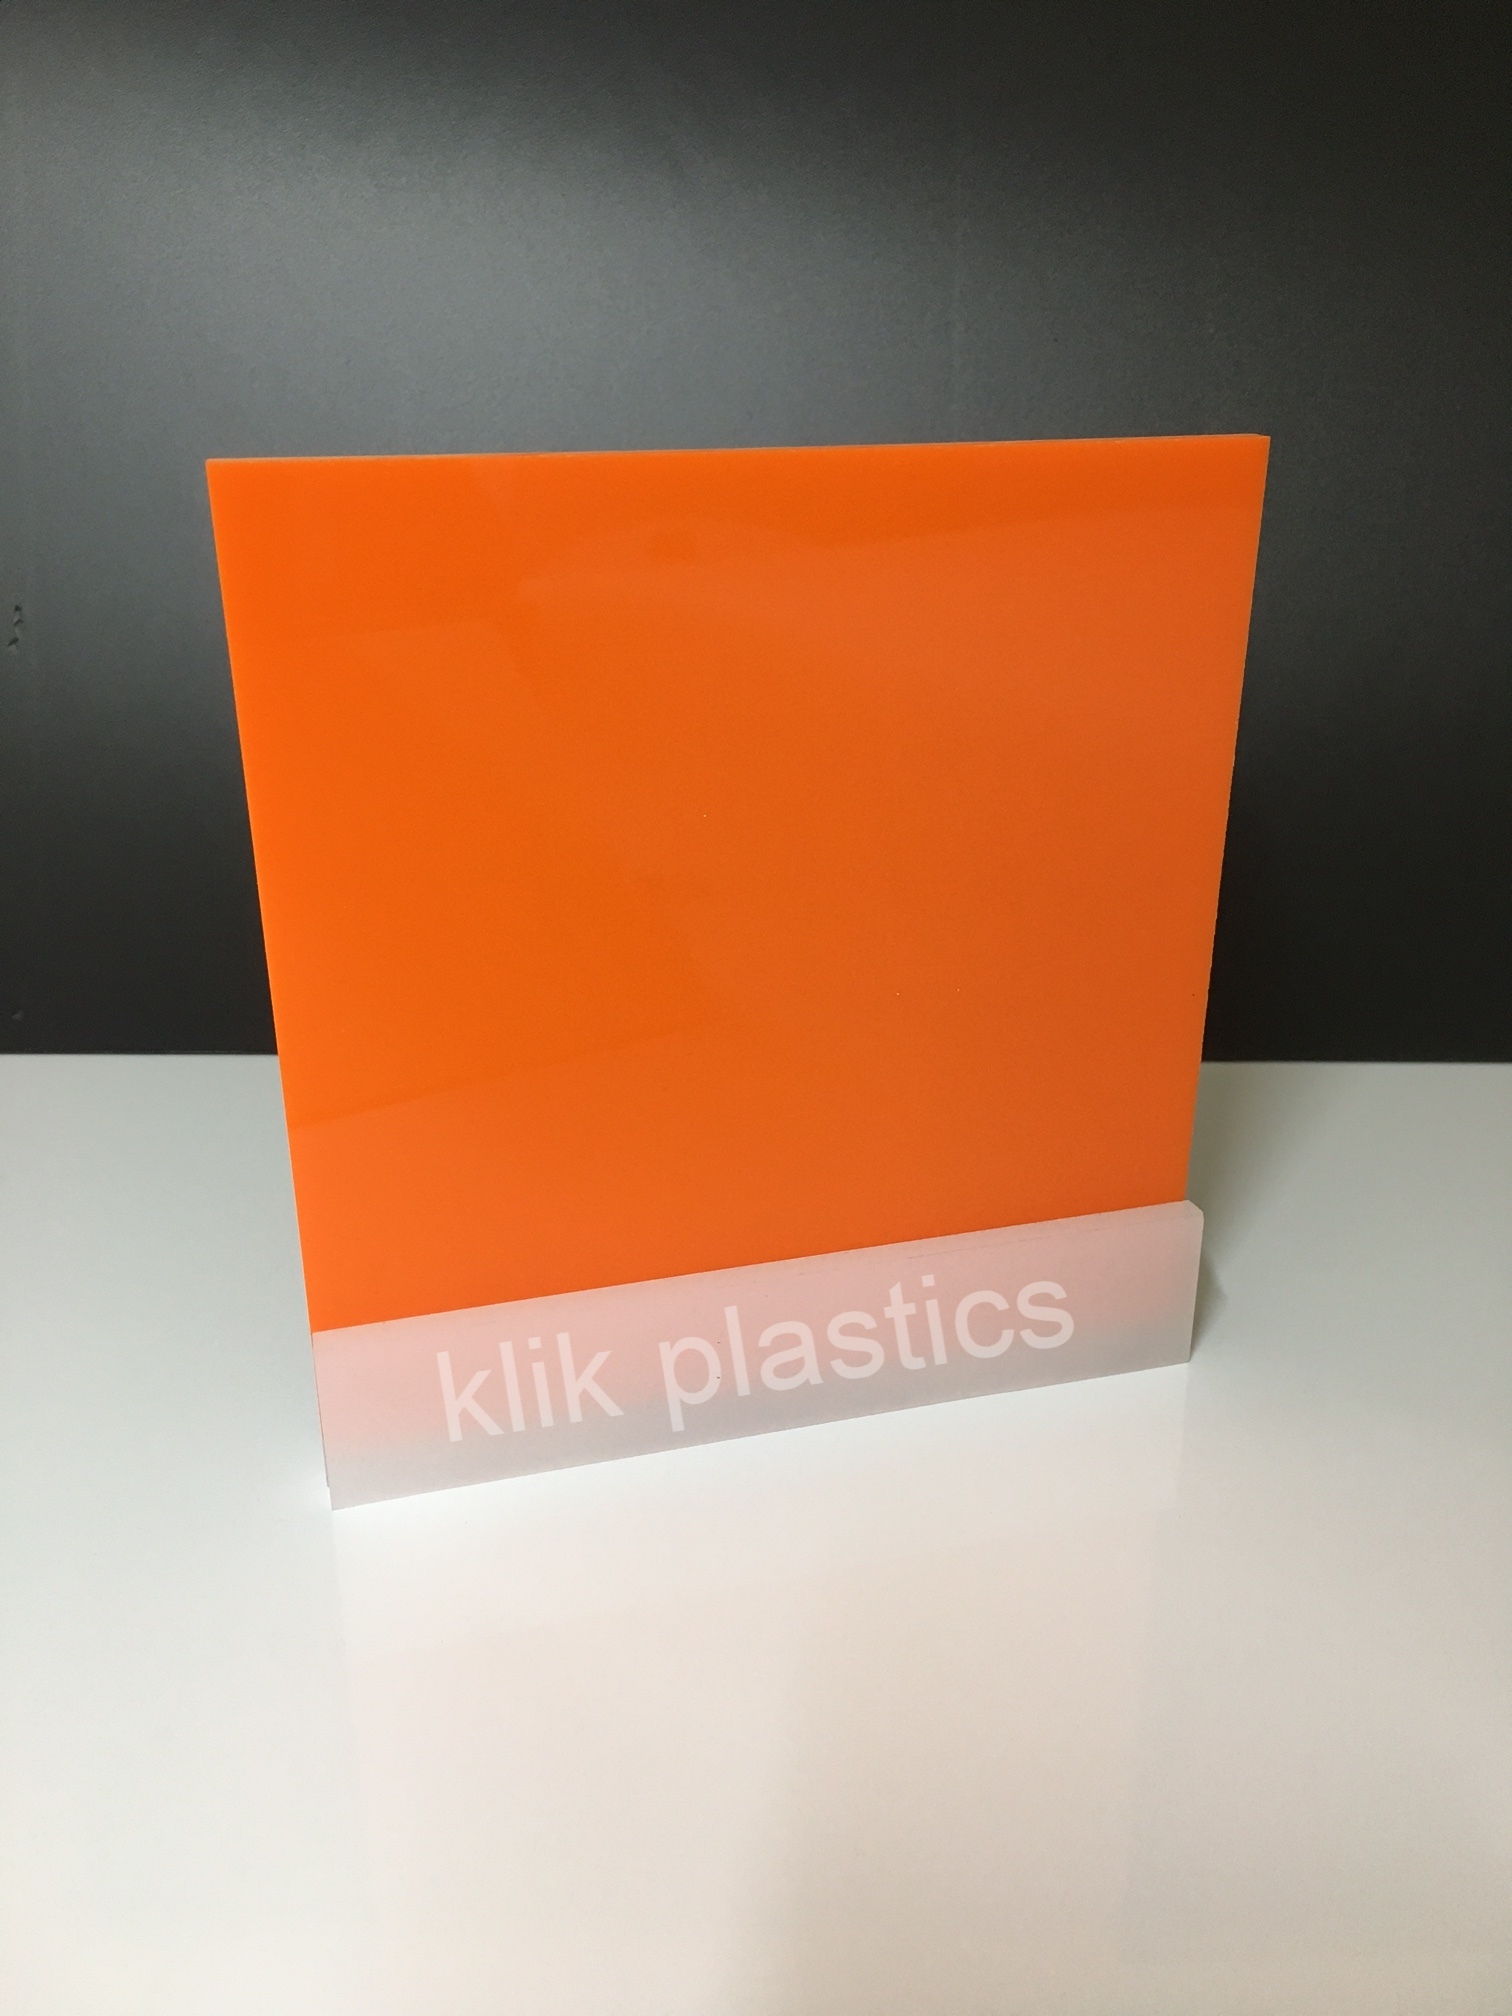 Main image for Klik Plastics